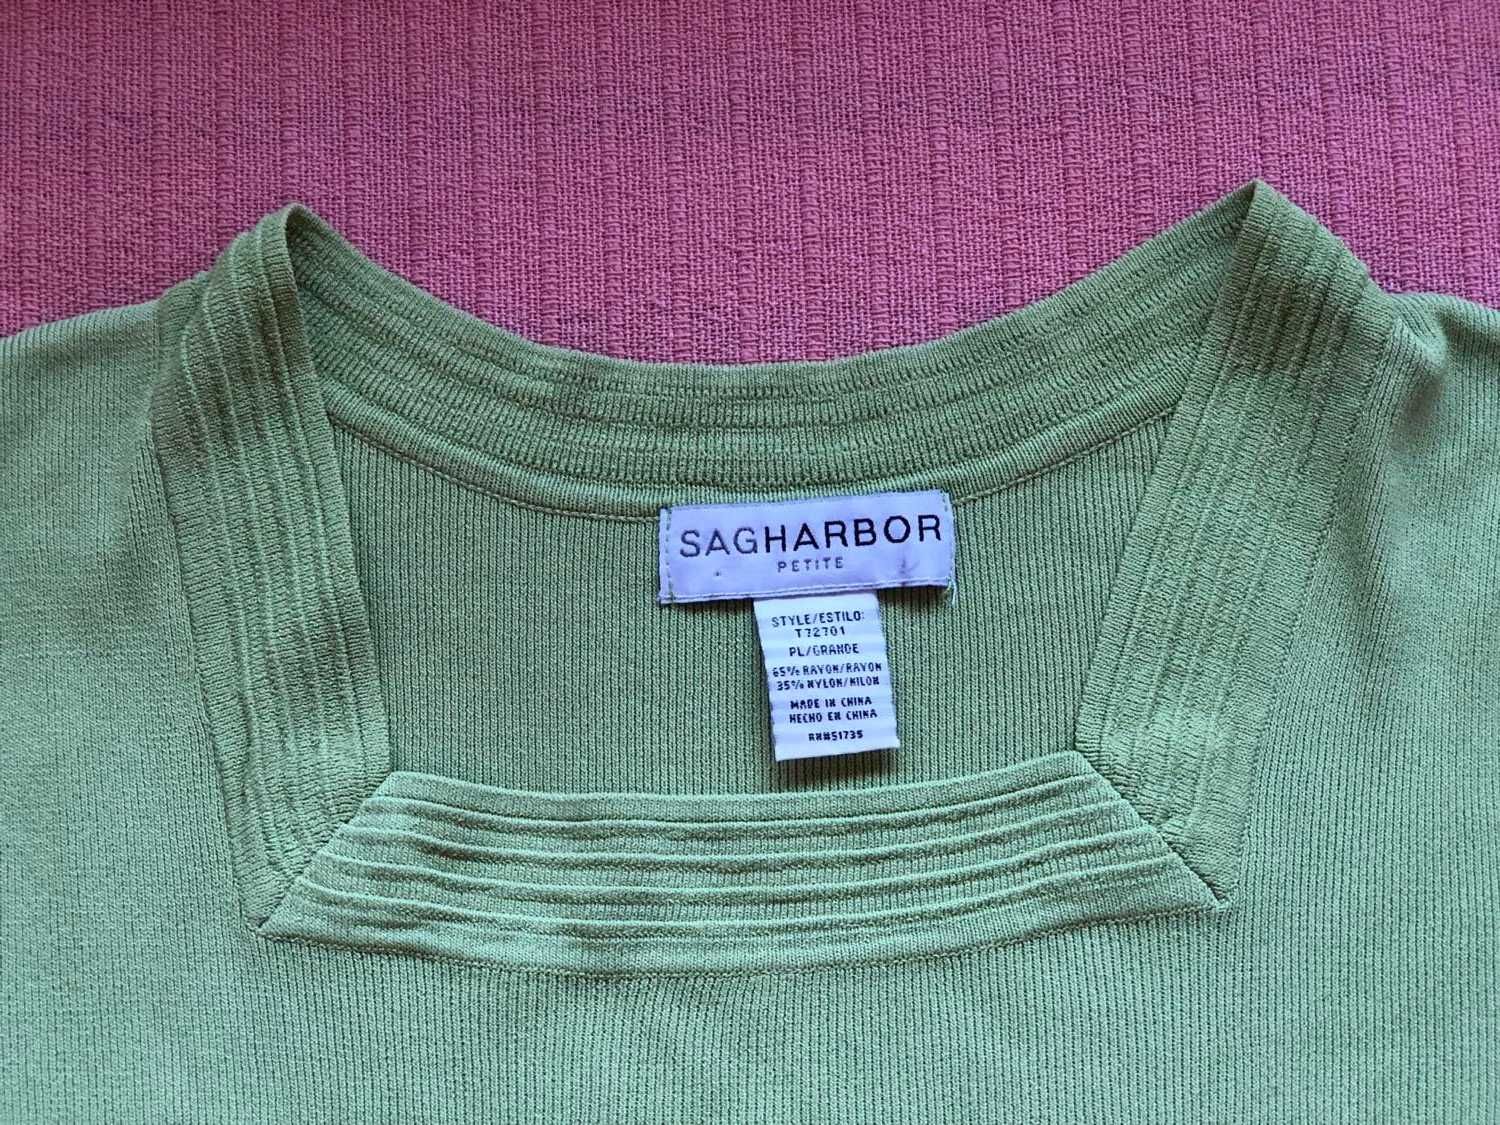 T-shirt/camisola Sagharbor Petit - T. M